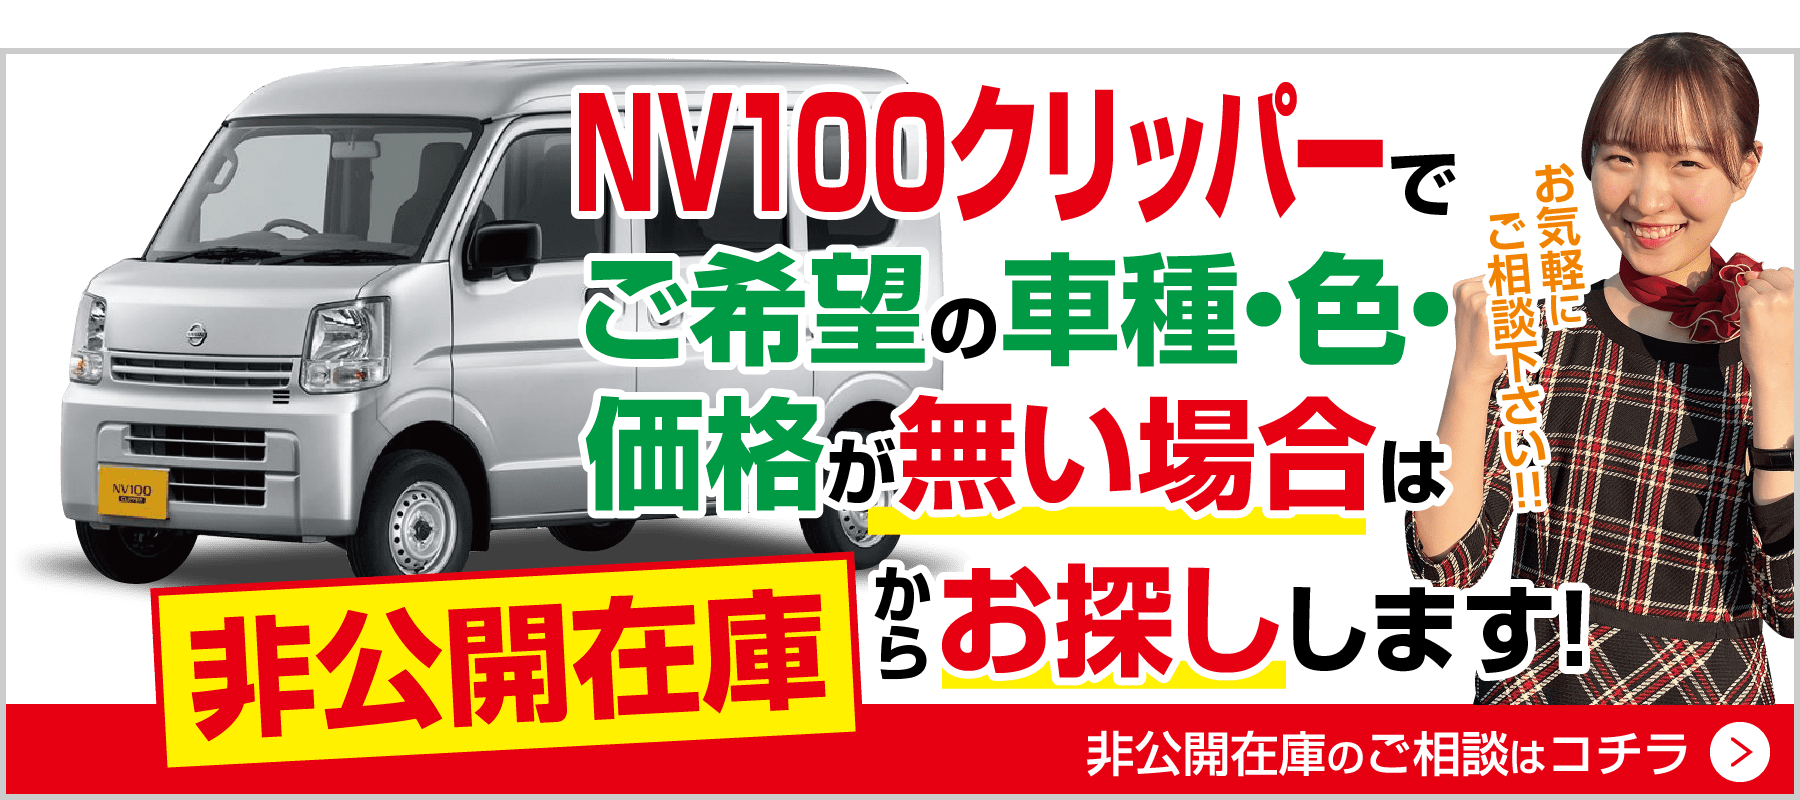 NV100クリッパーでご希望の車種・色・価格がない場合は非公開在庫から探します